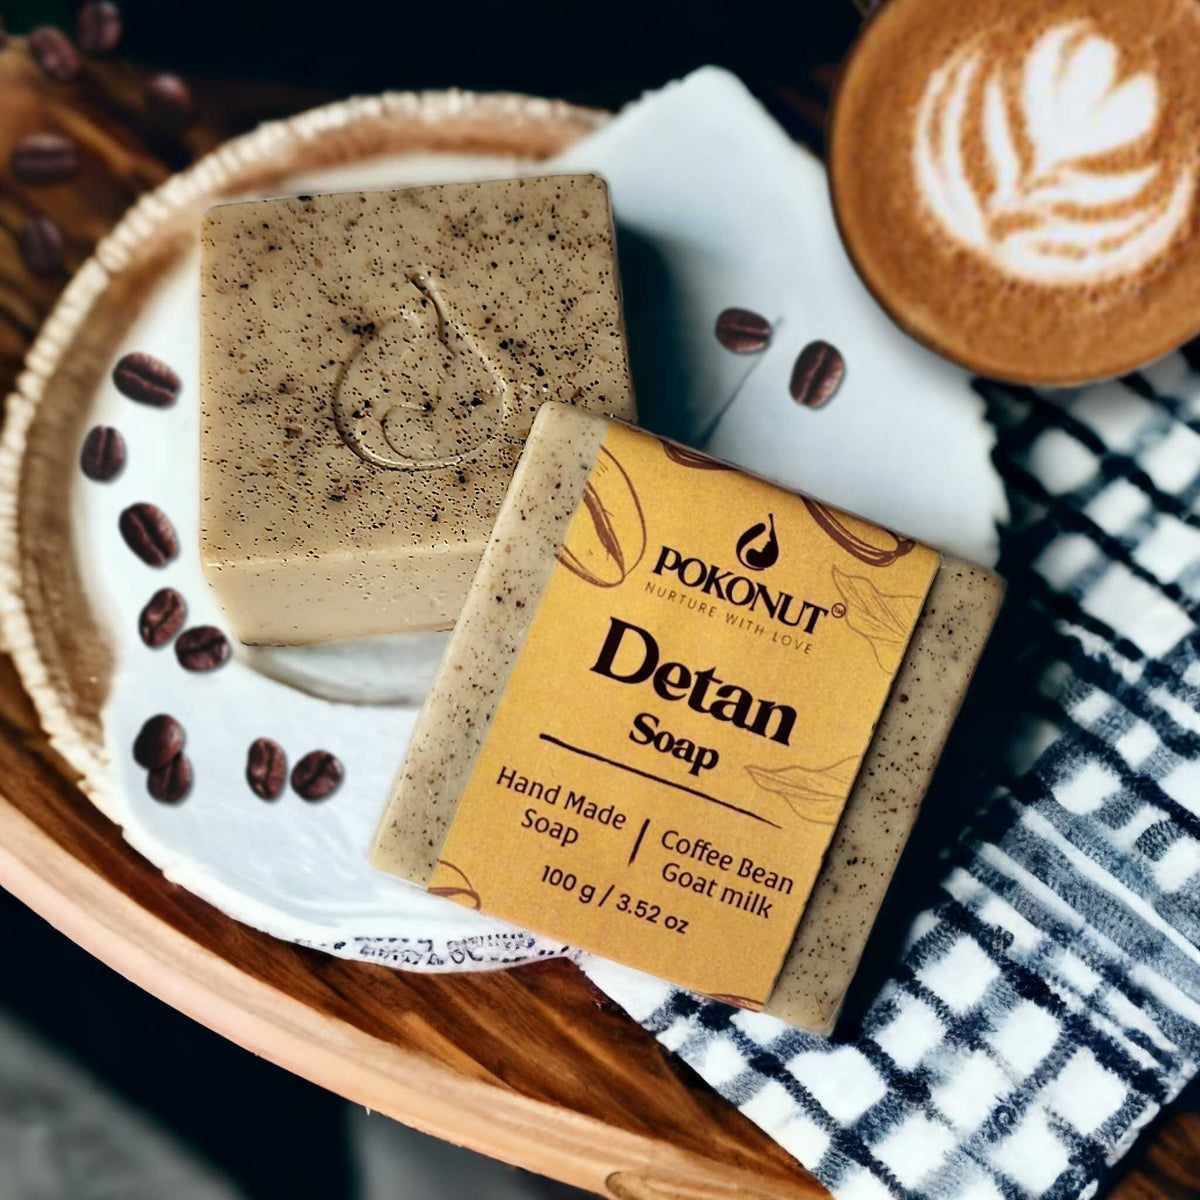 Detan soap |Coffee-goat milk |Pack of 2(100g)